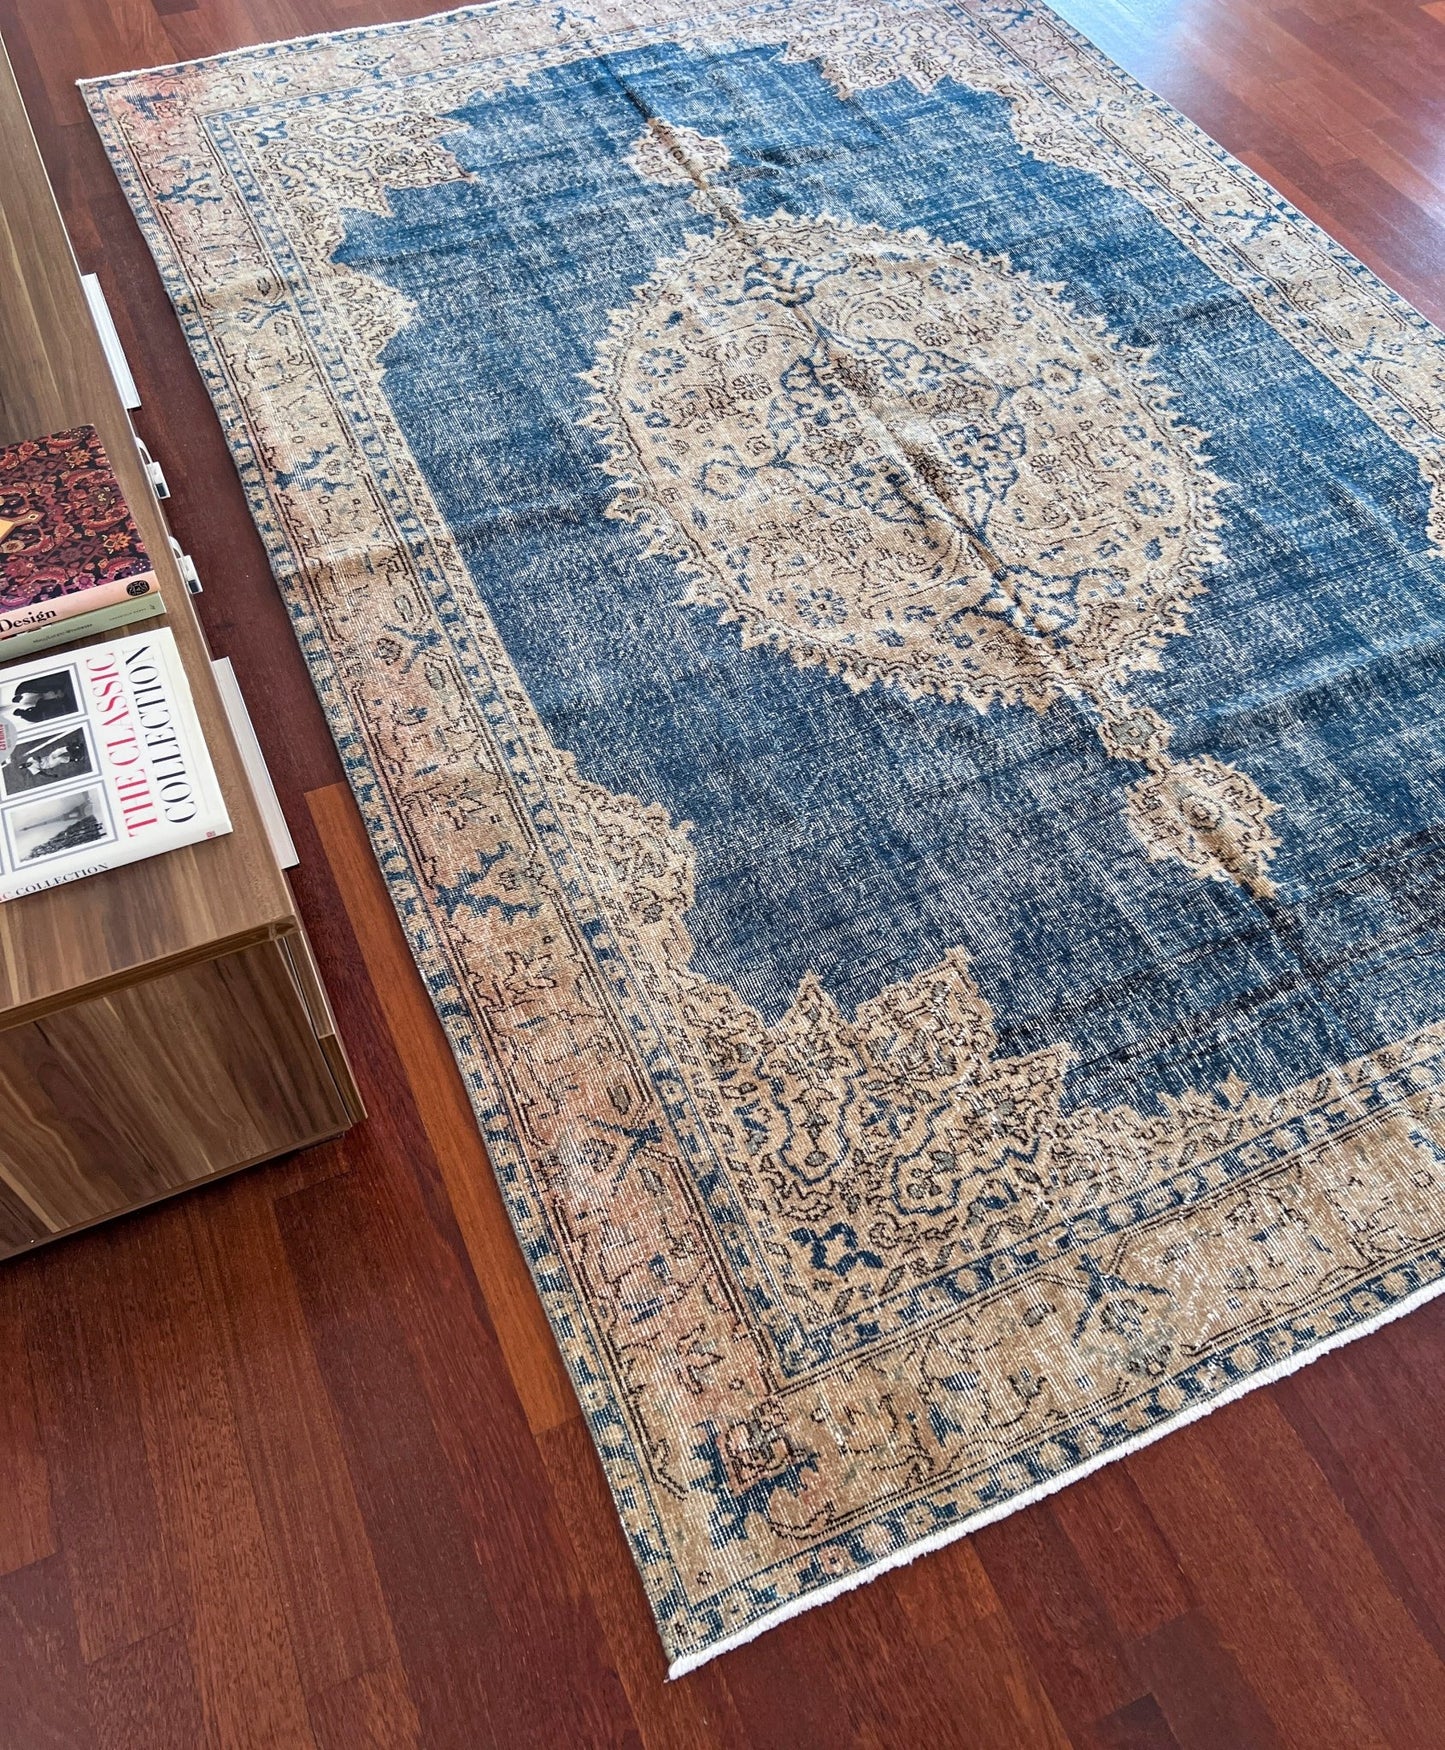 blue yellow large turkish rug shop san francisco bay area rug. oriental rug berkeley buy handmade rug online canada toronto